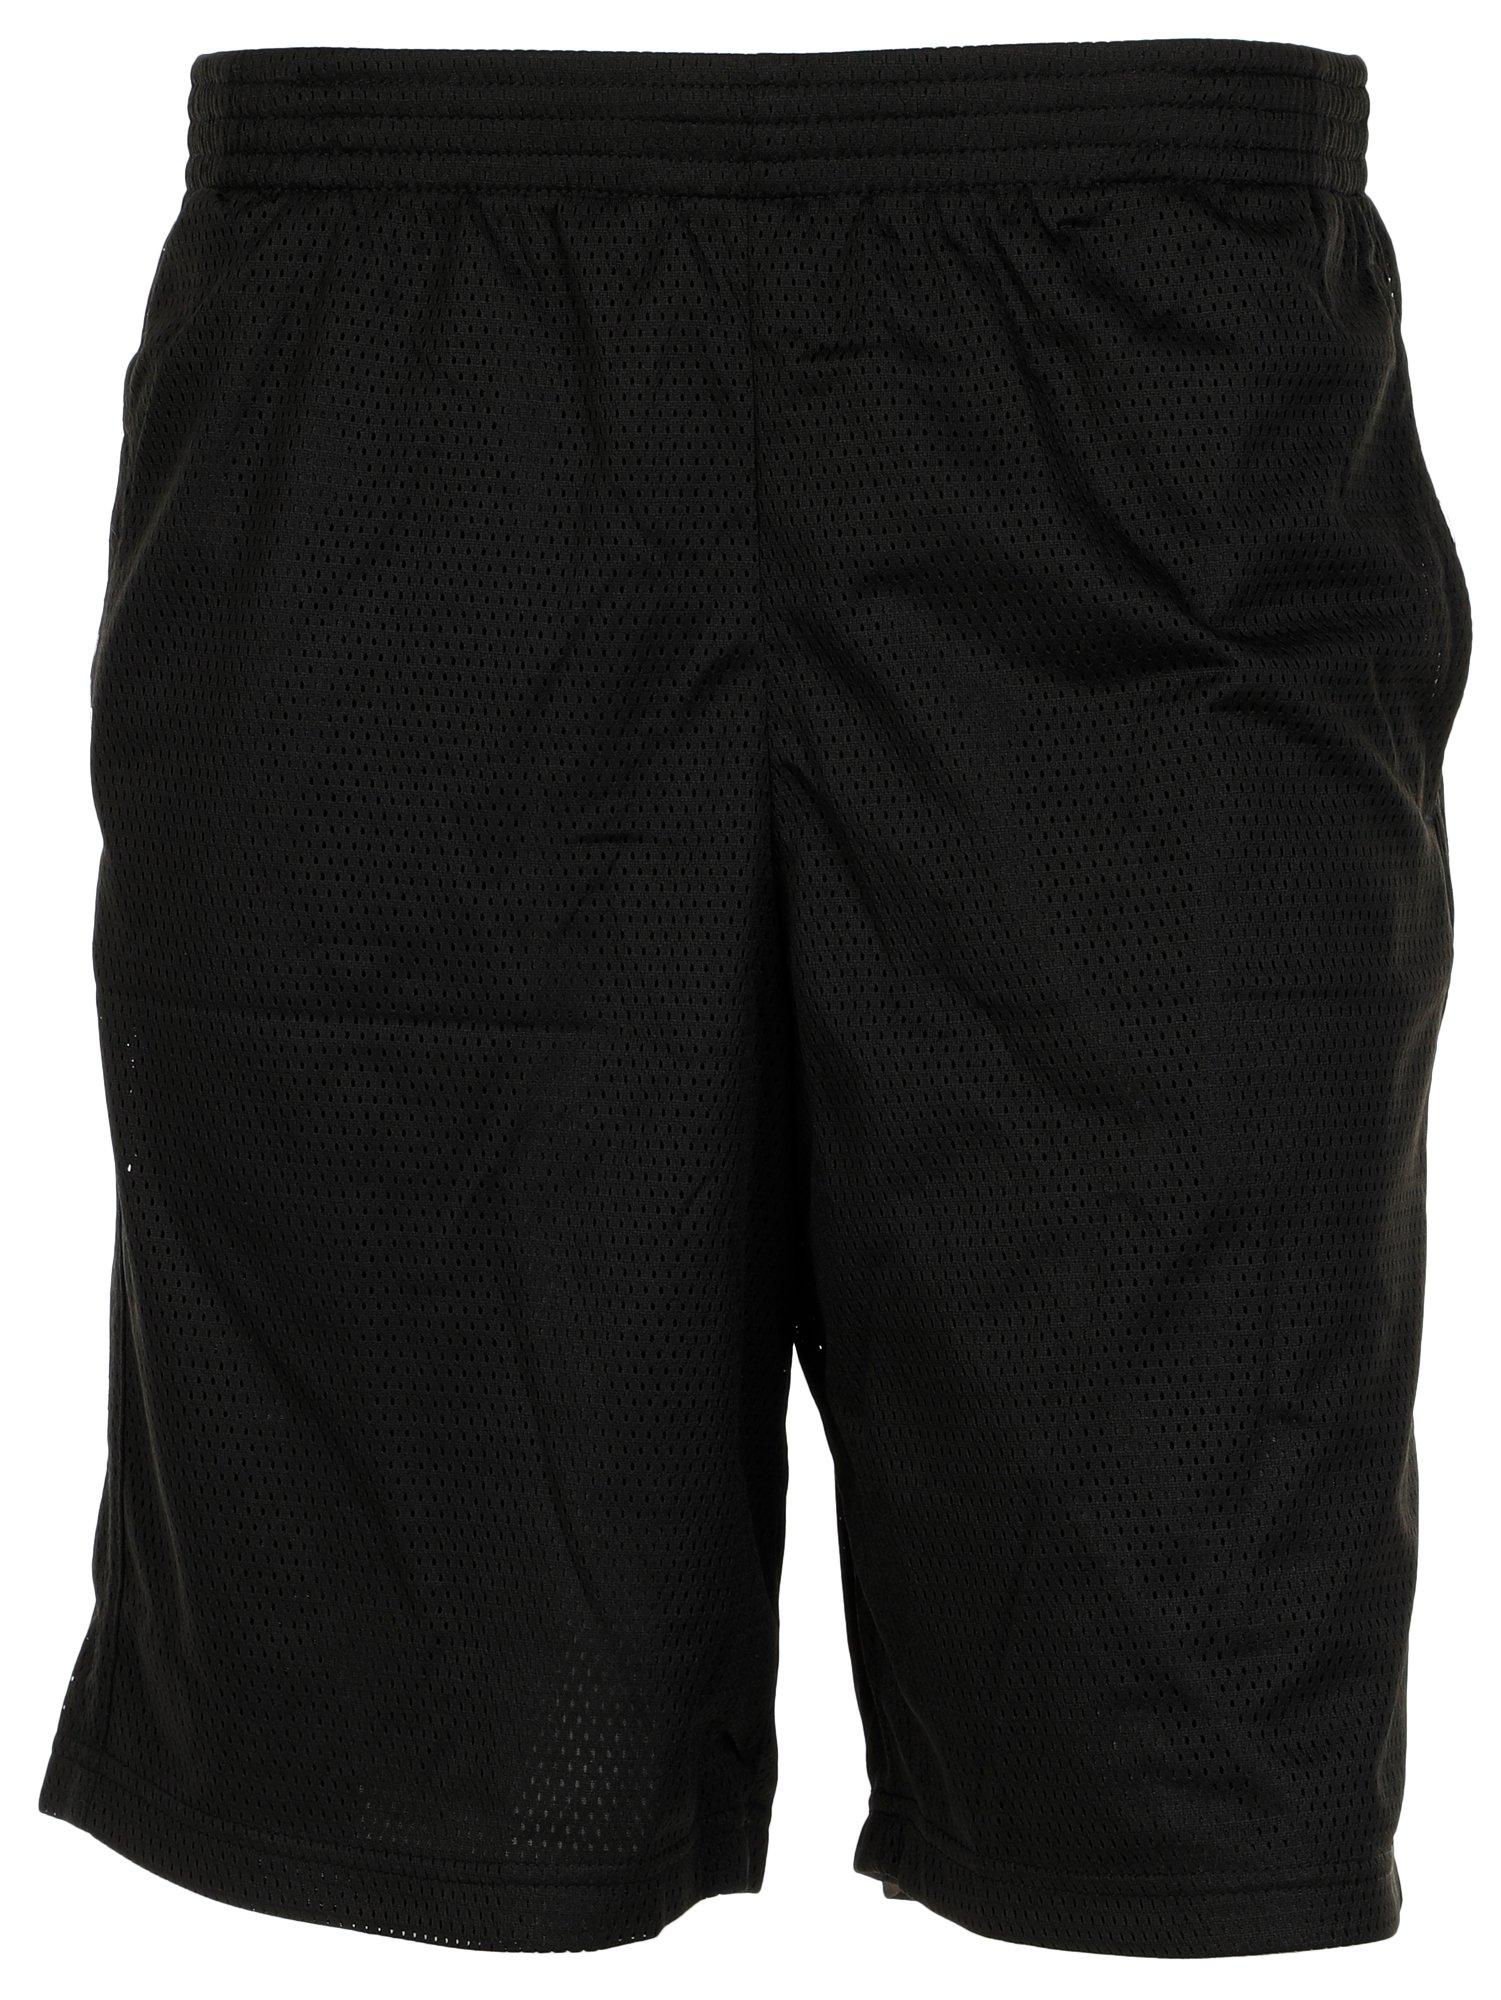 Men's Active Solid Shorts